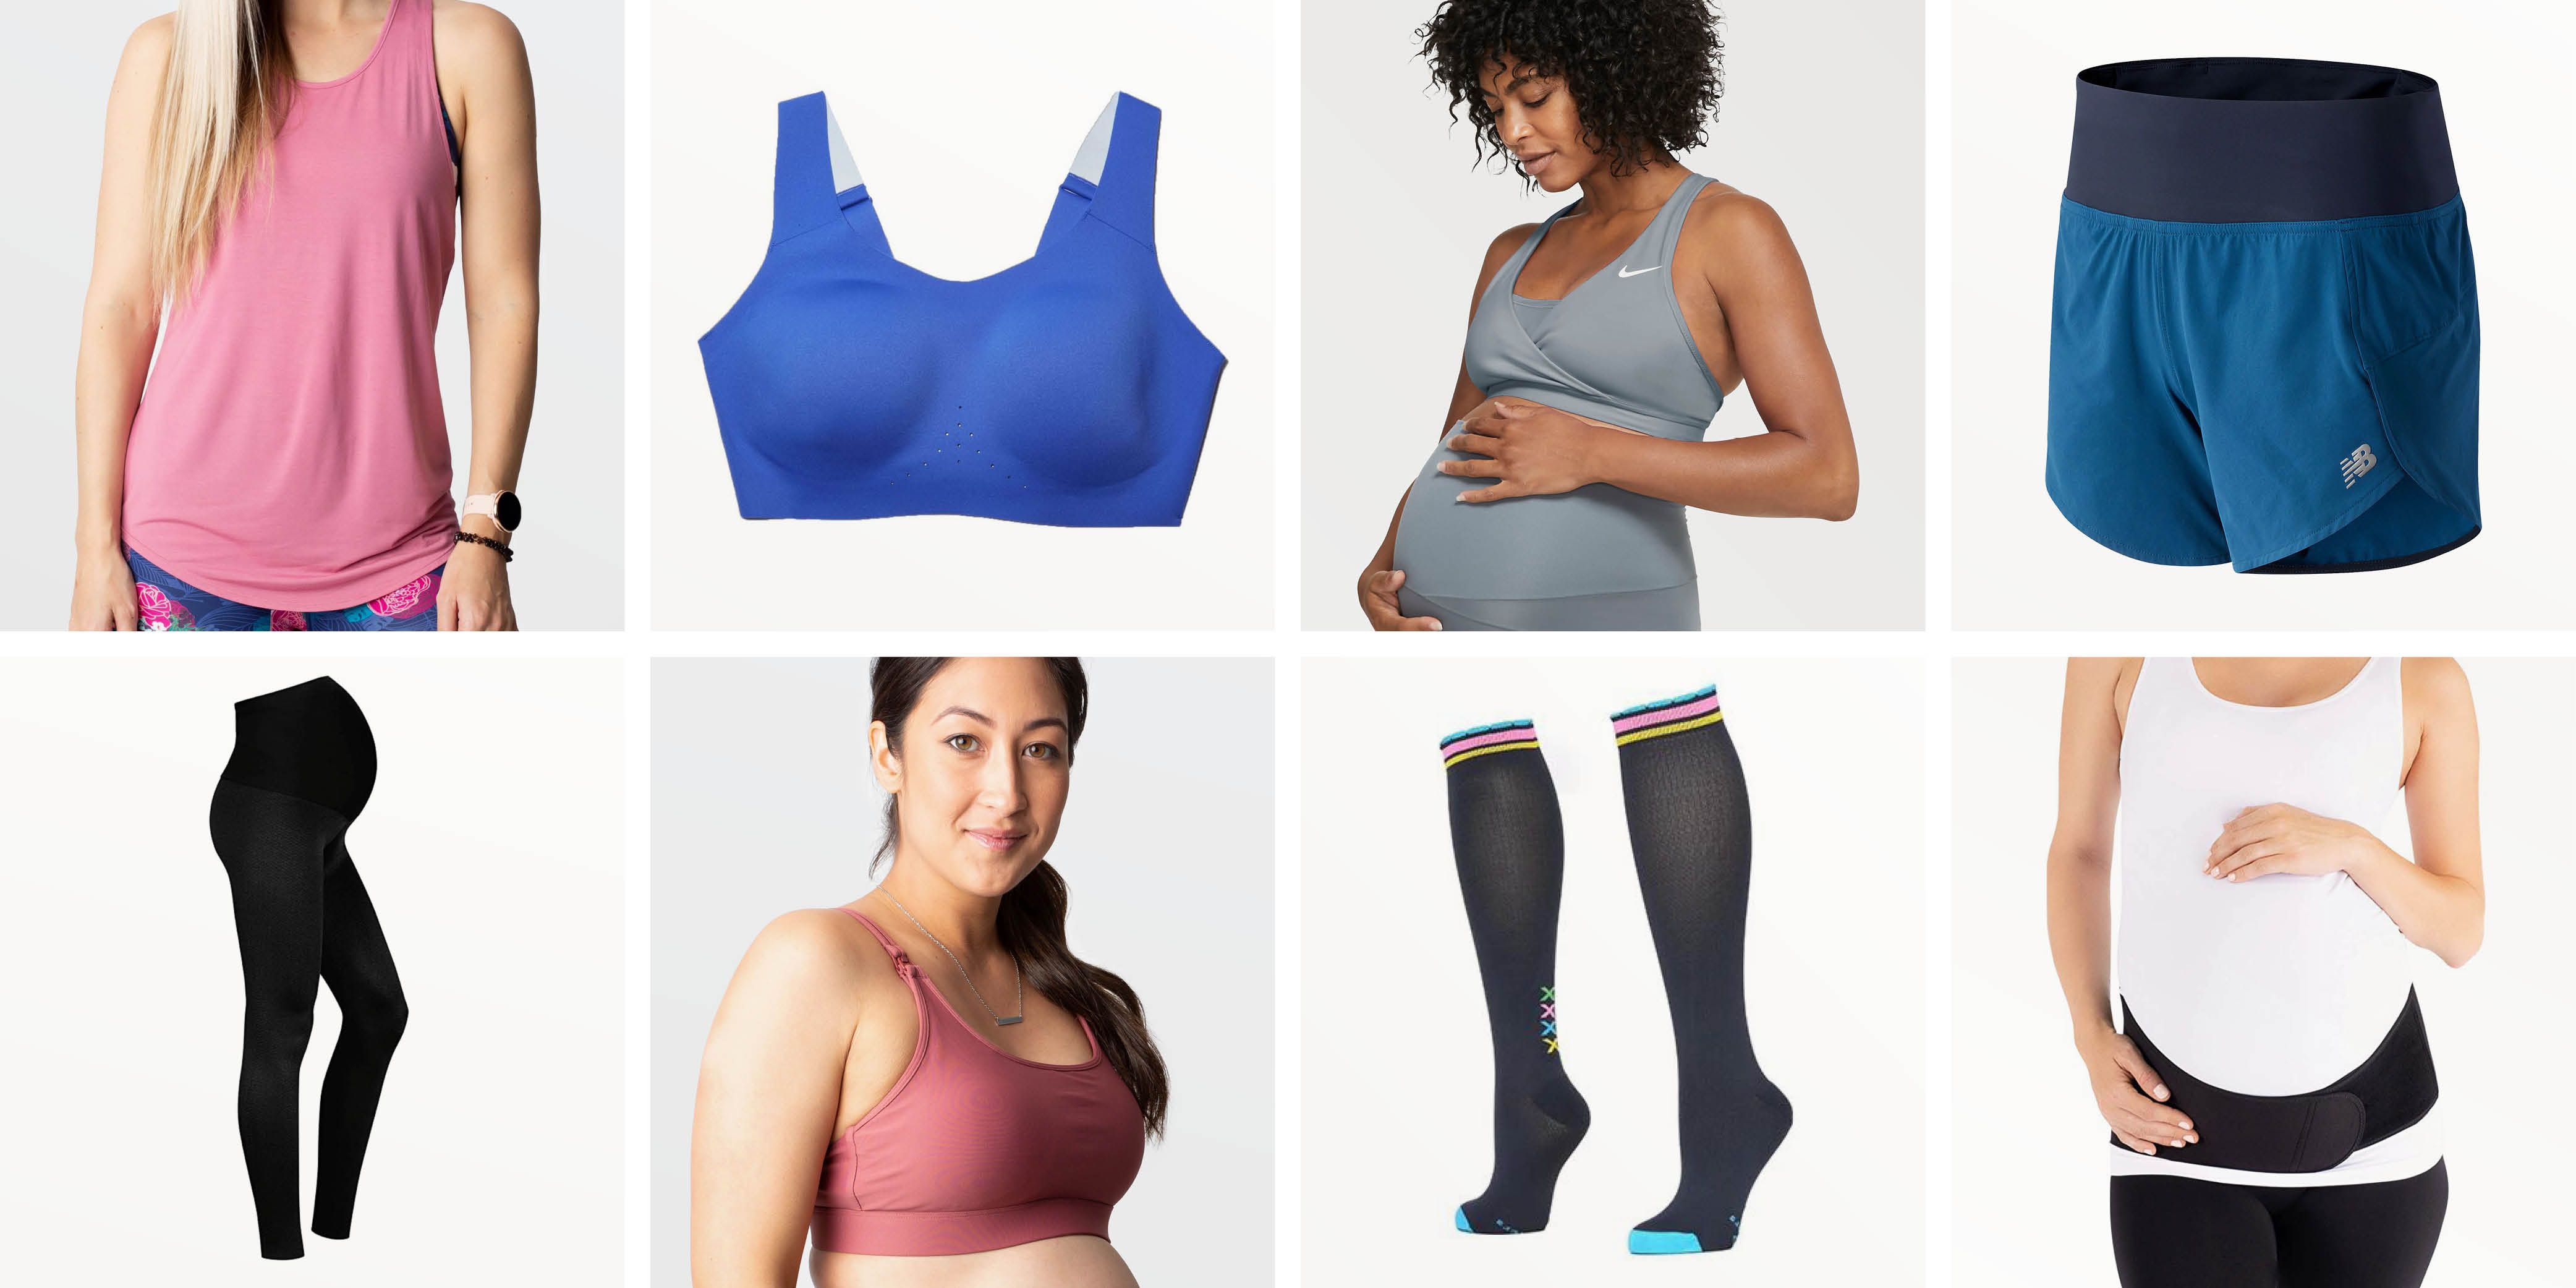 Best Maternity Fitness Gear To Kickstart 2019